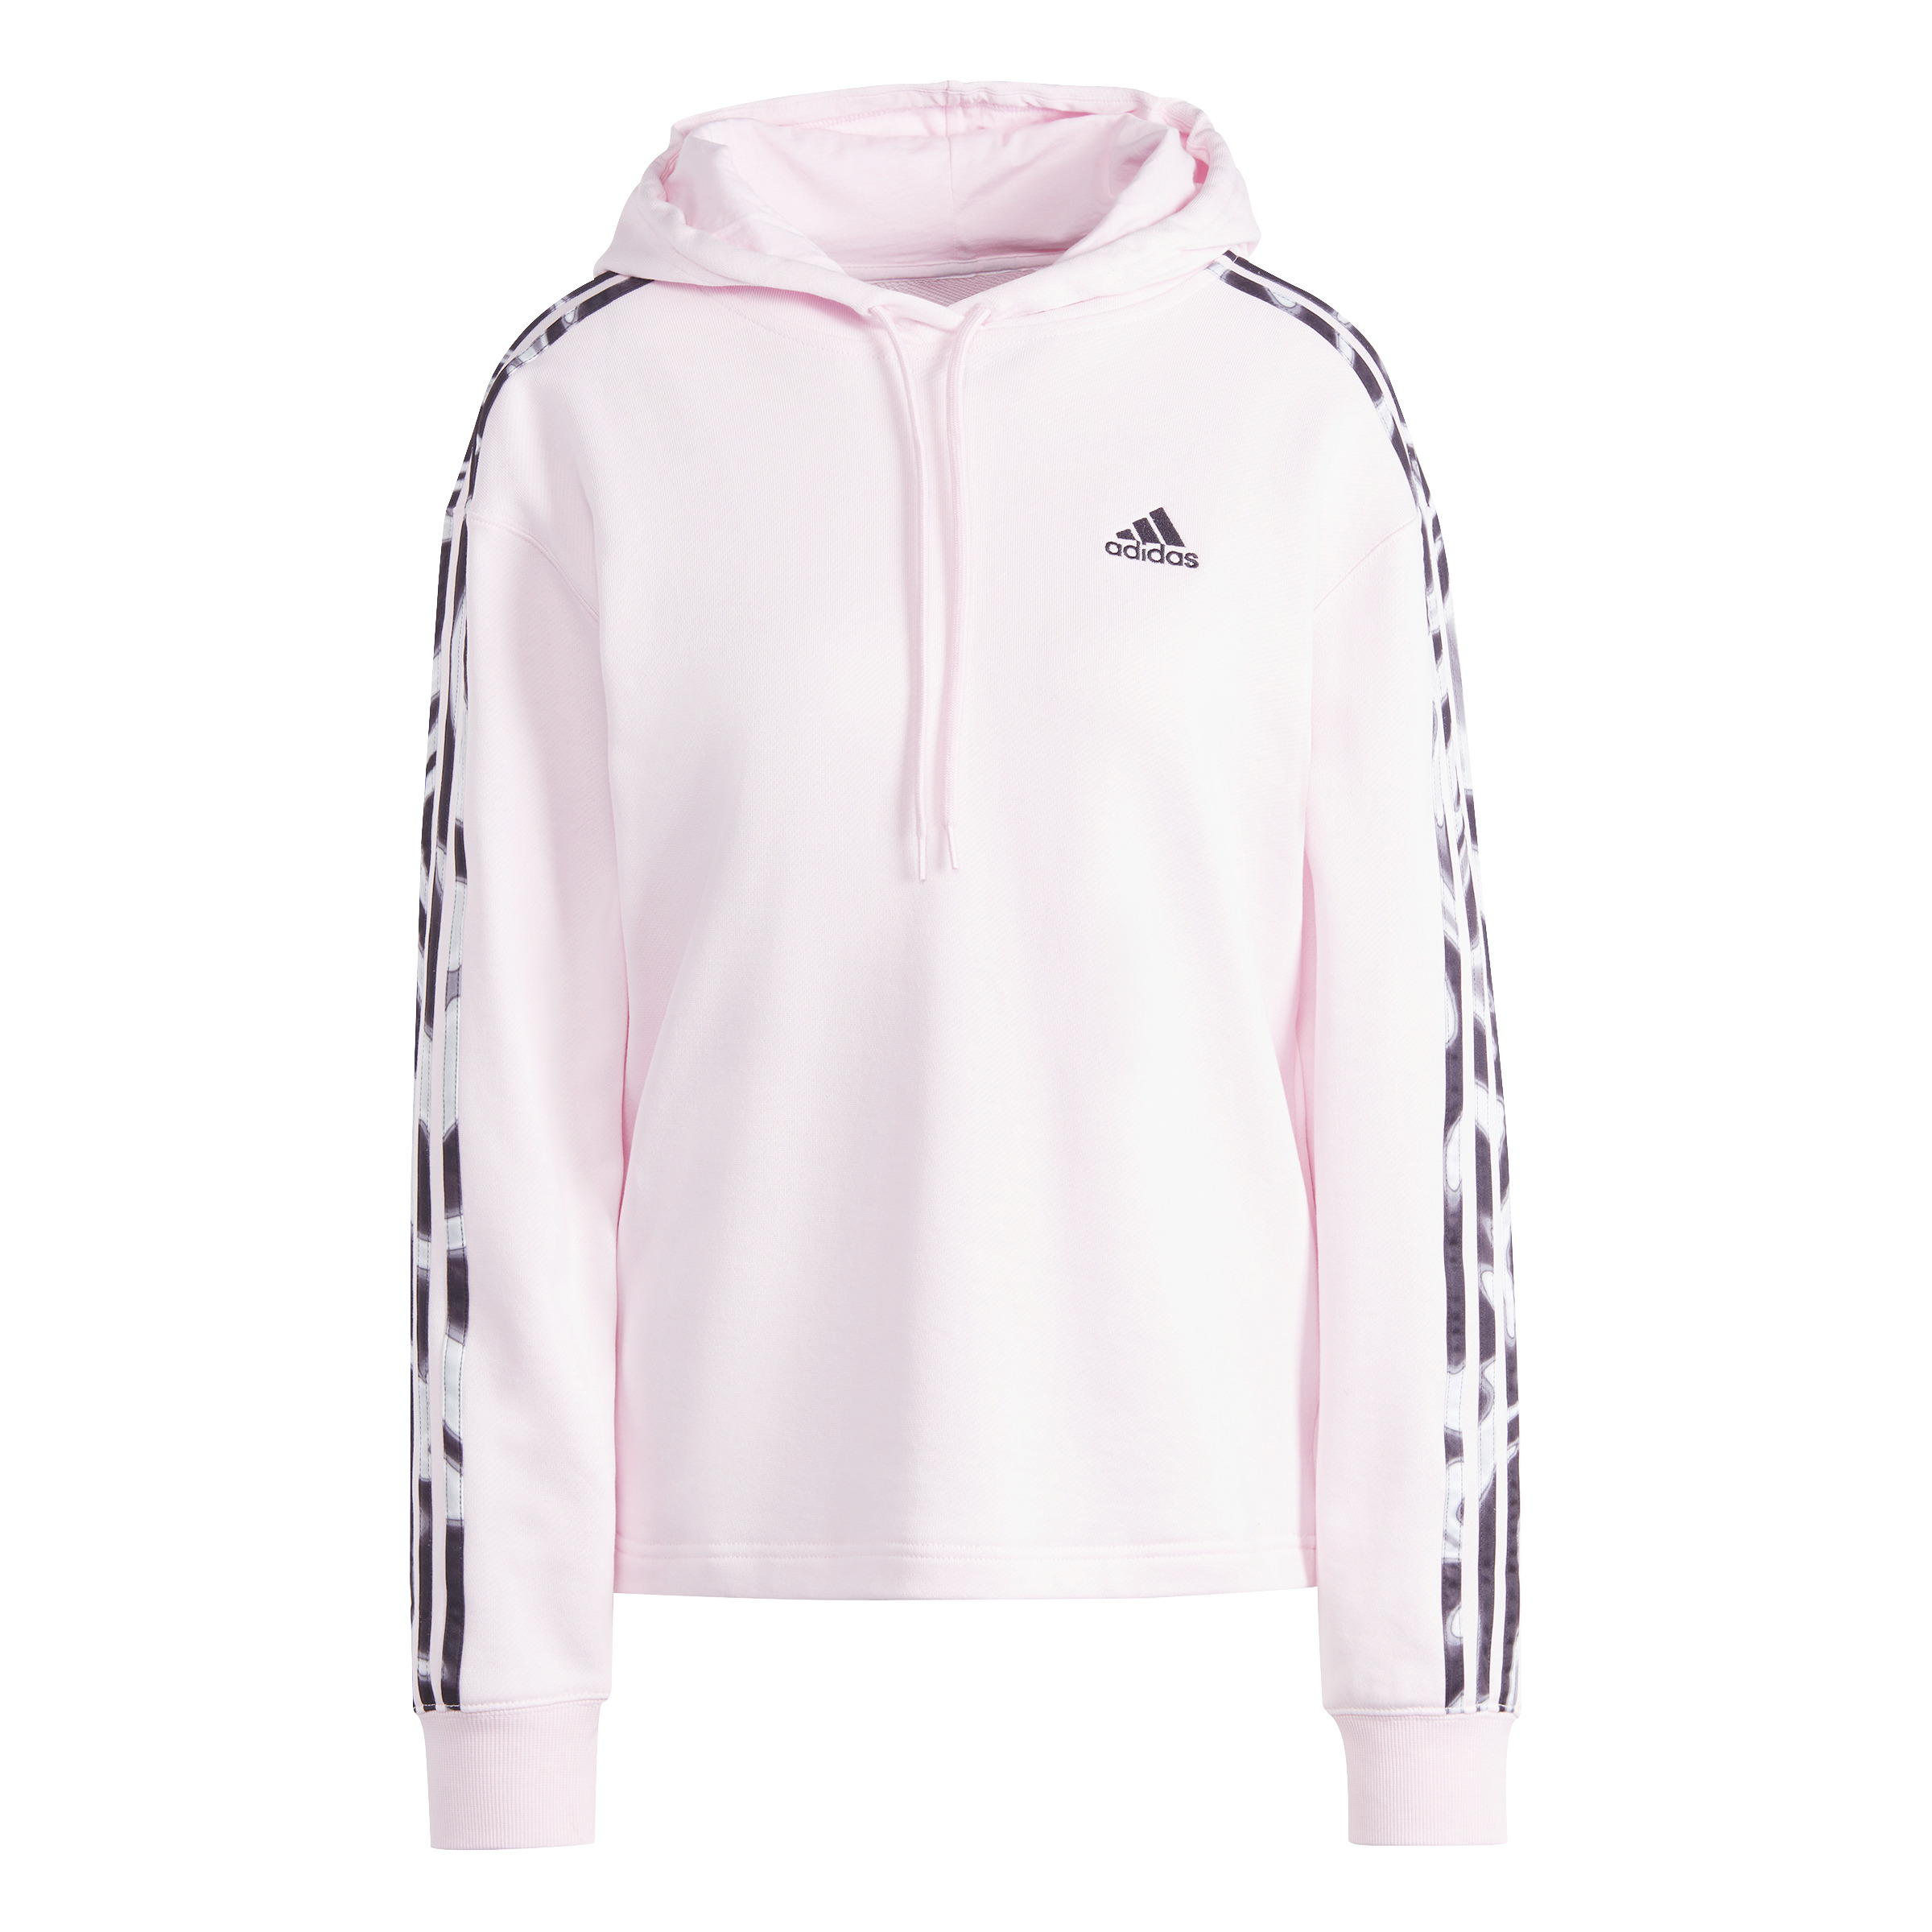 HD 3S sportswear adidas VIBAOP SportLand – Pink IL5873 Shop